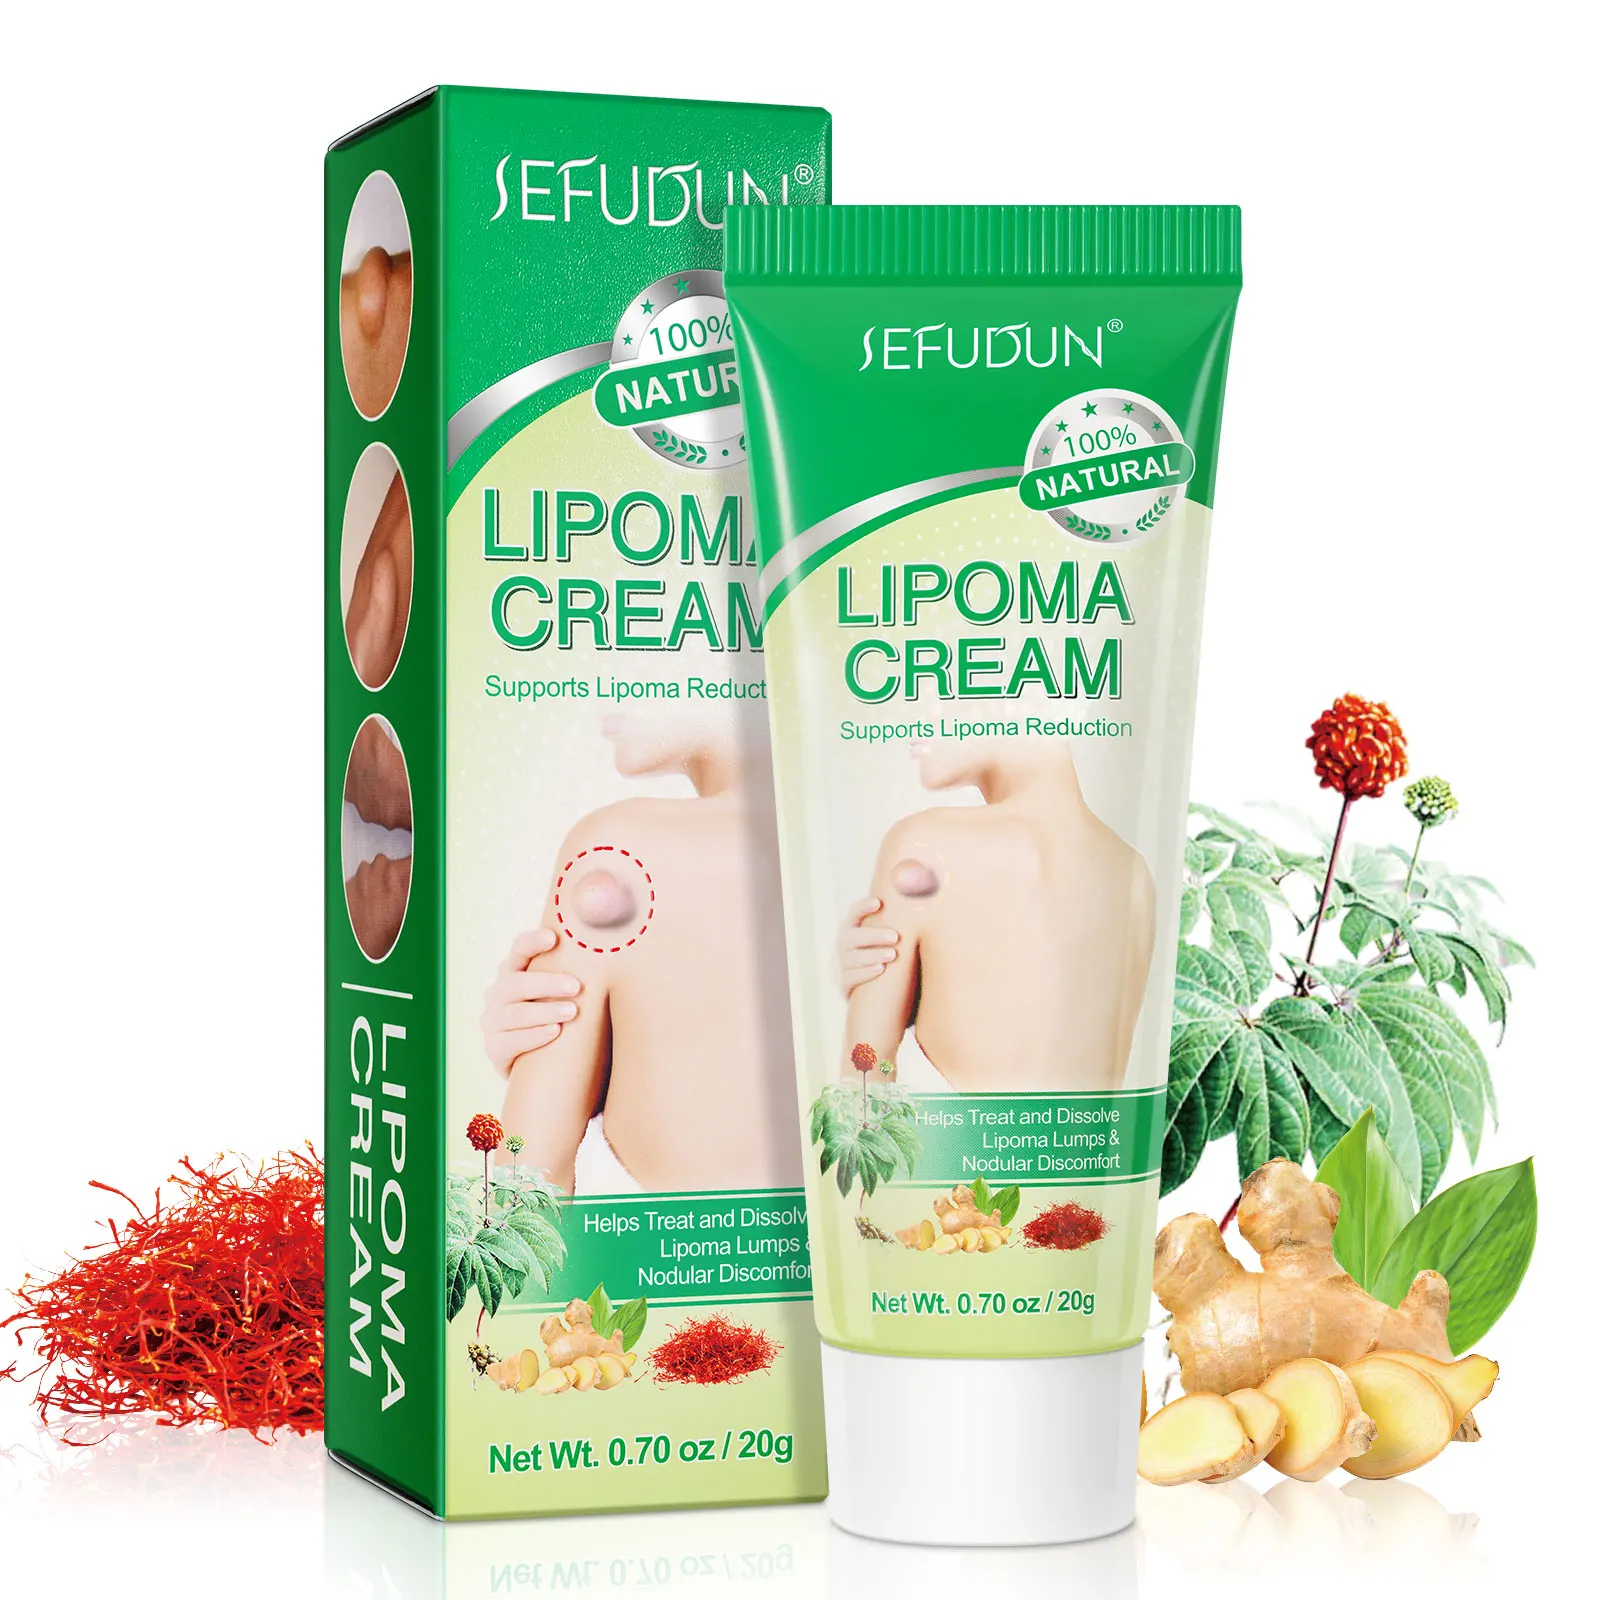 

SEFUDUN natural plant extract quick effective penetration skin layer lipoma treatment creamlipoma removal creamlipoma cream